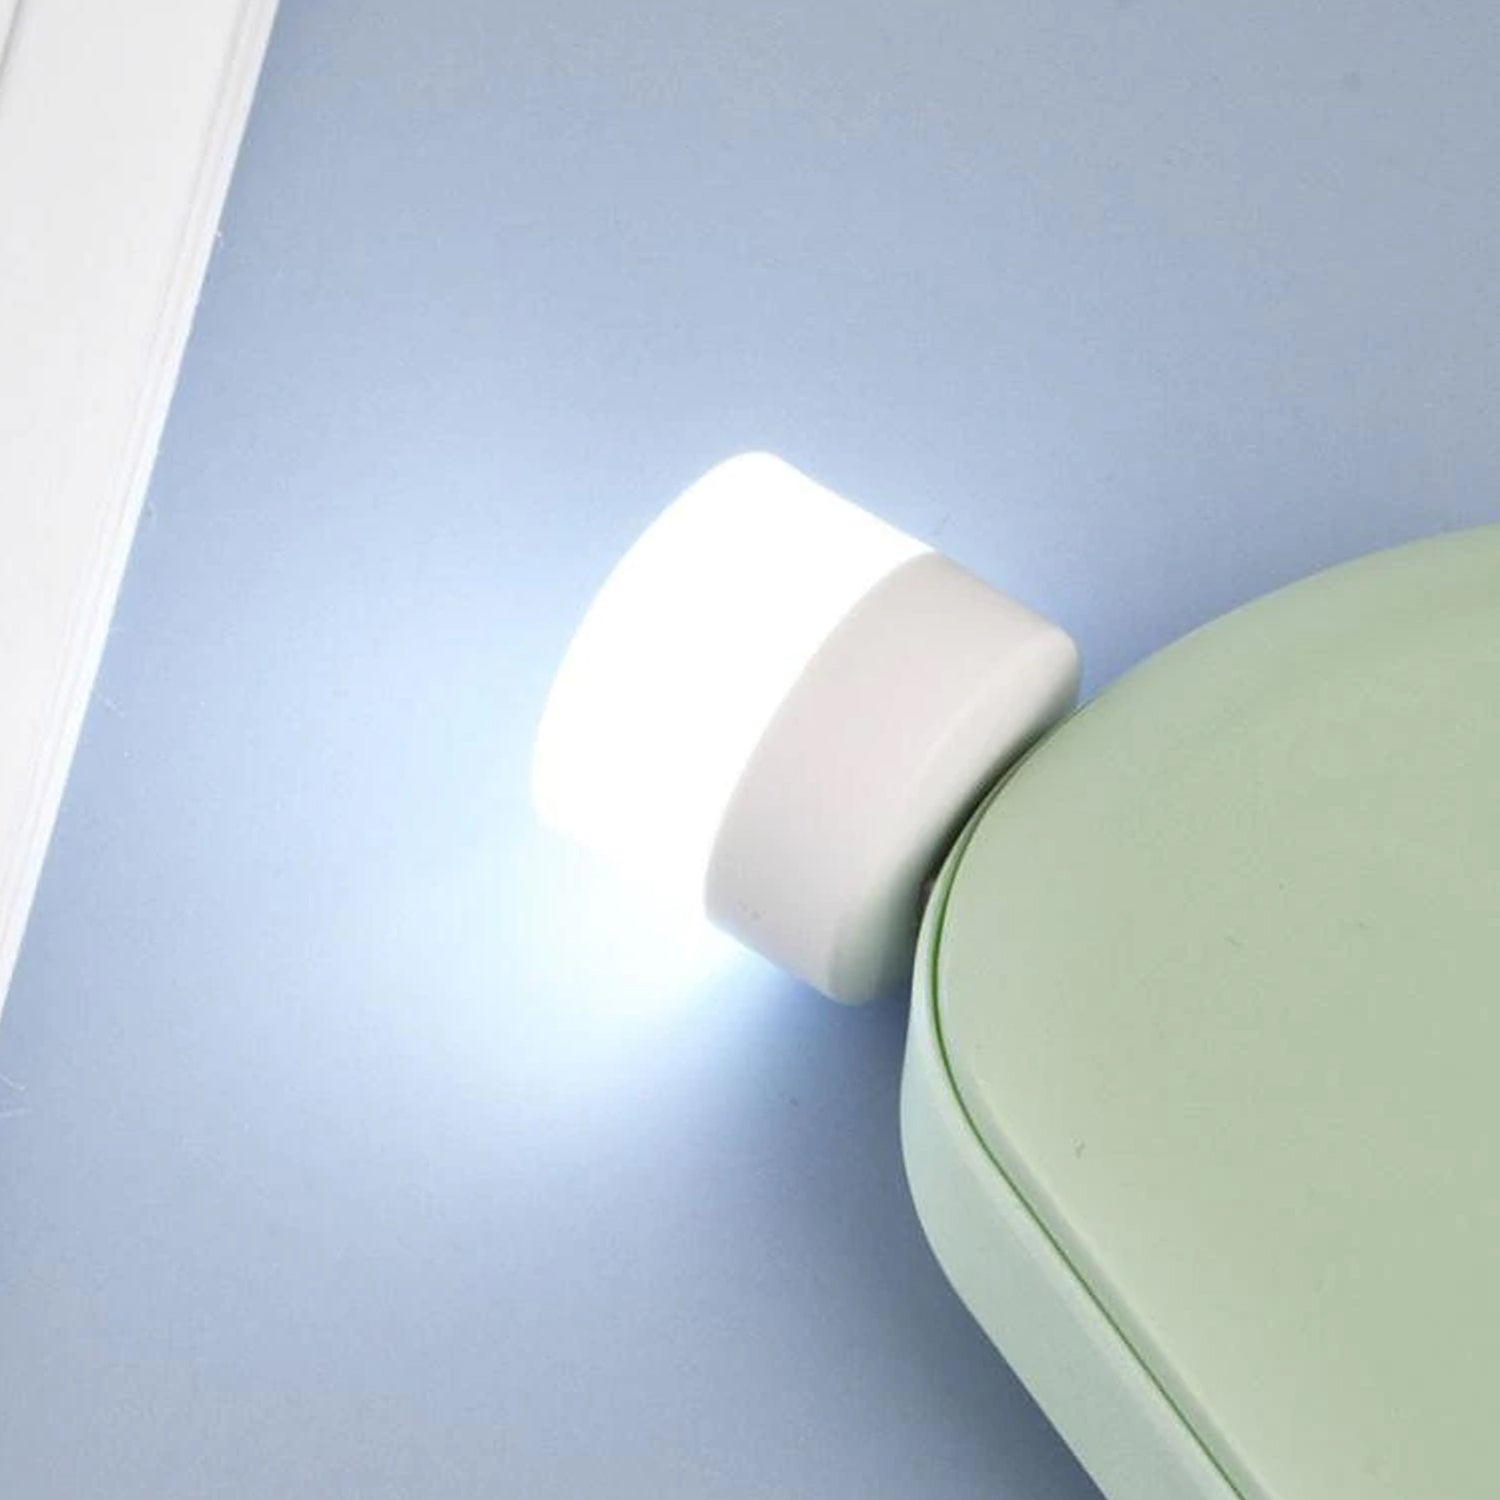 6293 USB LED LAMP Night Light, Plug in Small Led Nightlight — DeoDap